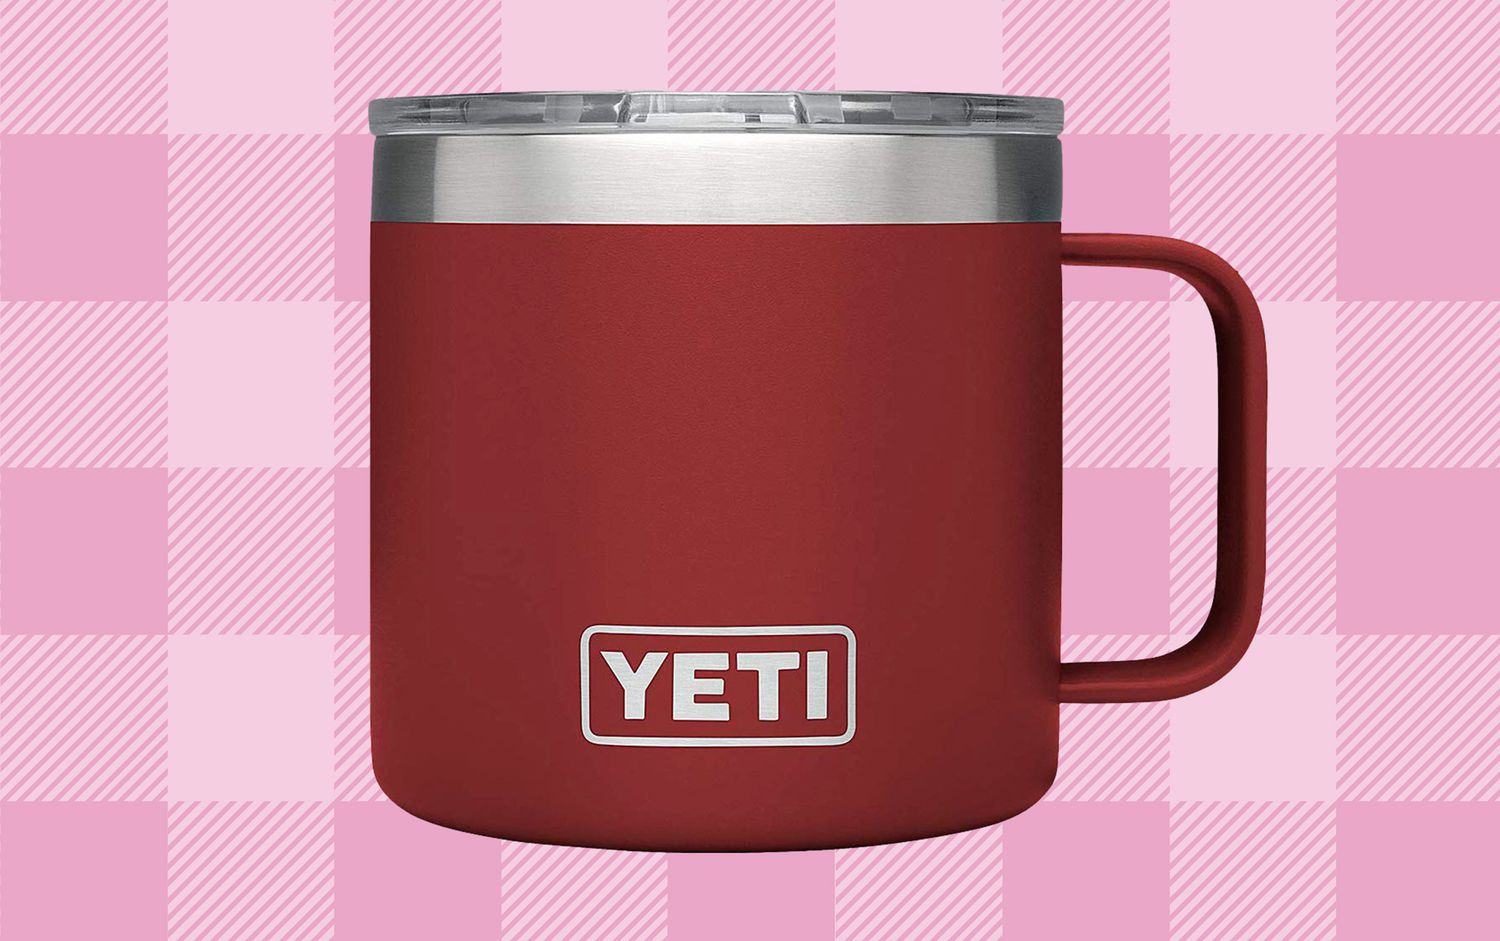 Yeti red mug on a pink checkered background